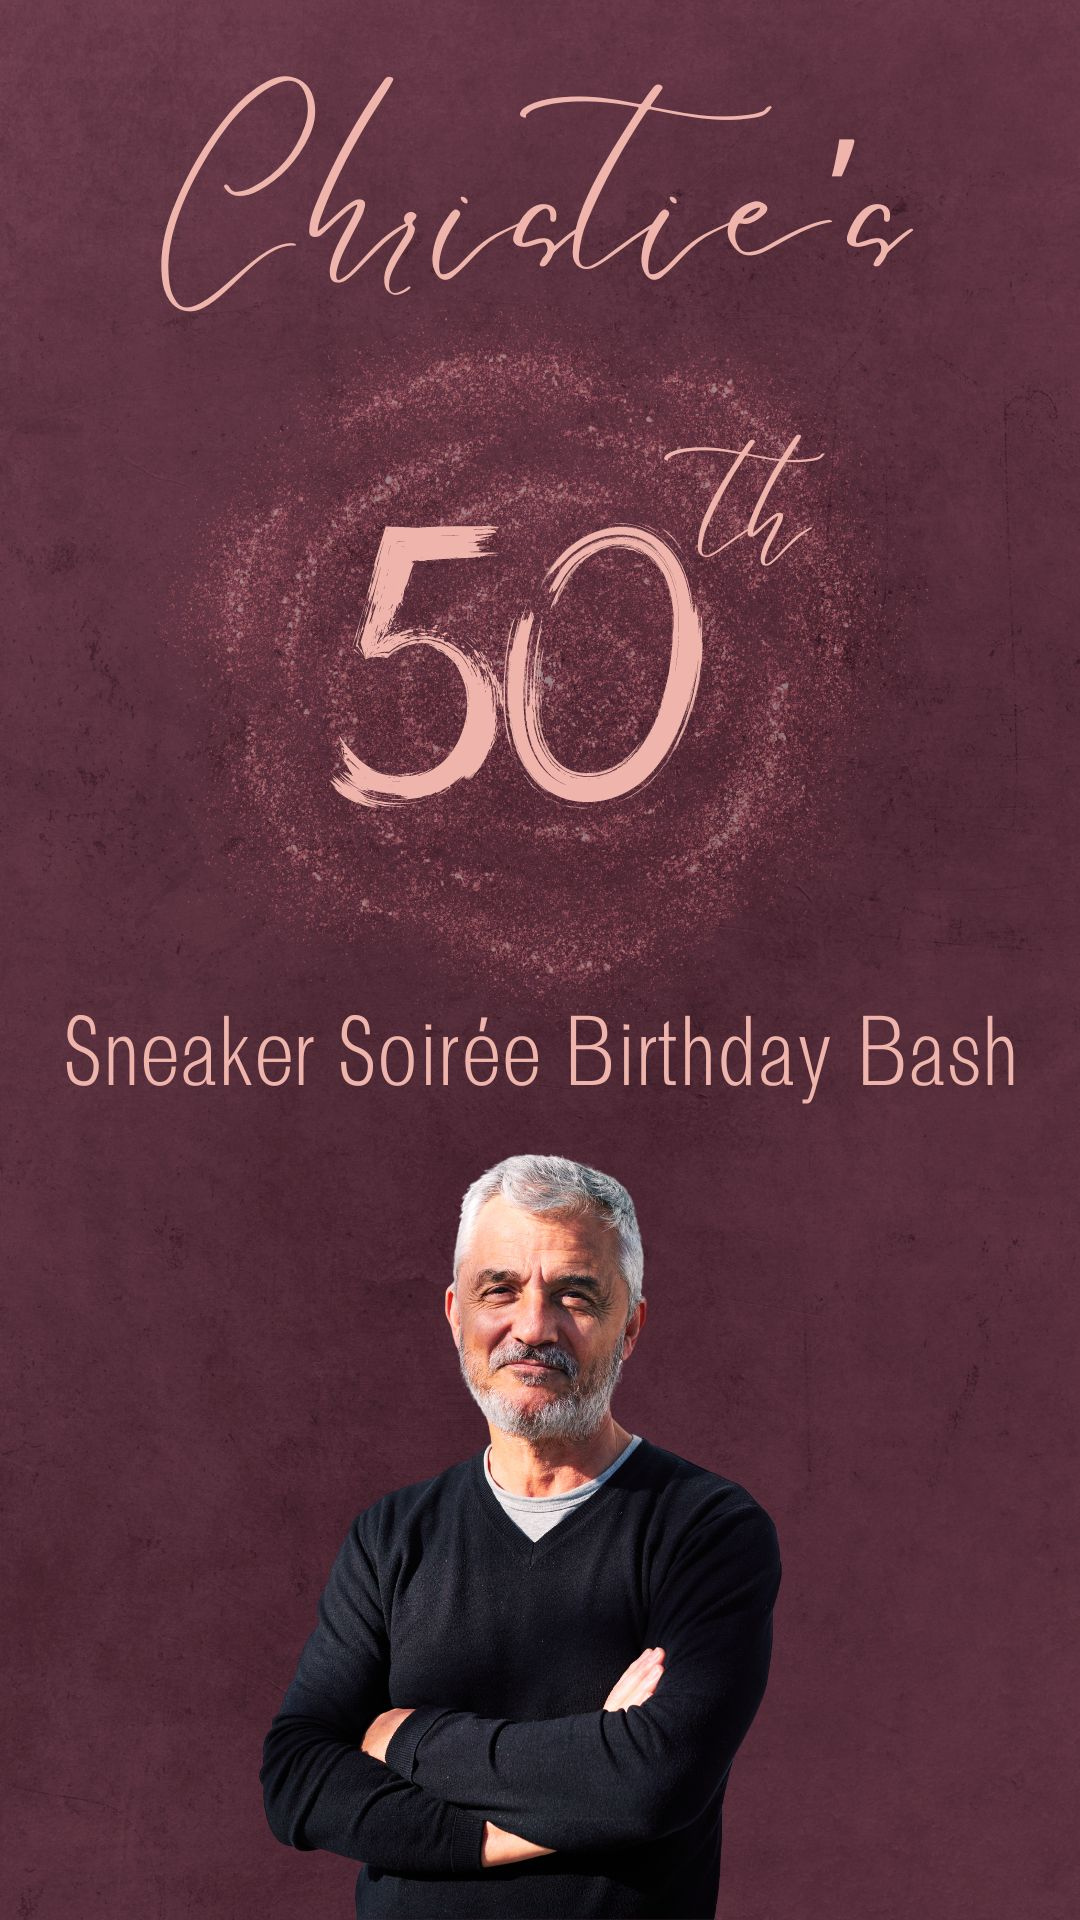 Rose Gold & Plum Sneaker Birthday Video invitation - Sneaker Theme Digital Birthday Party Invite